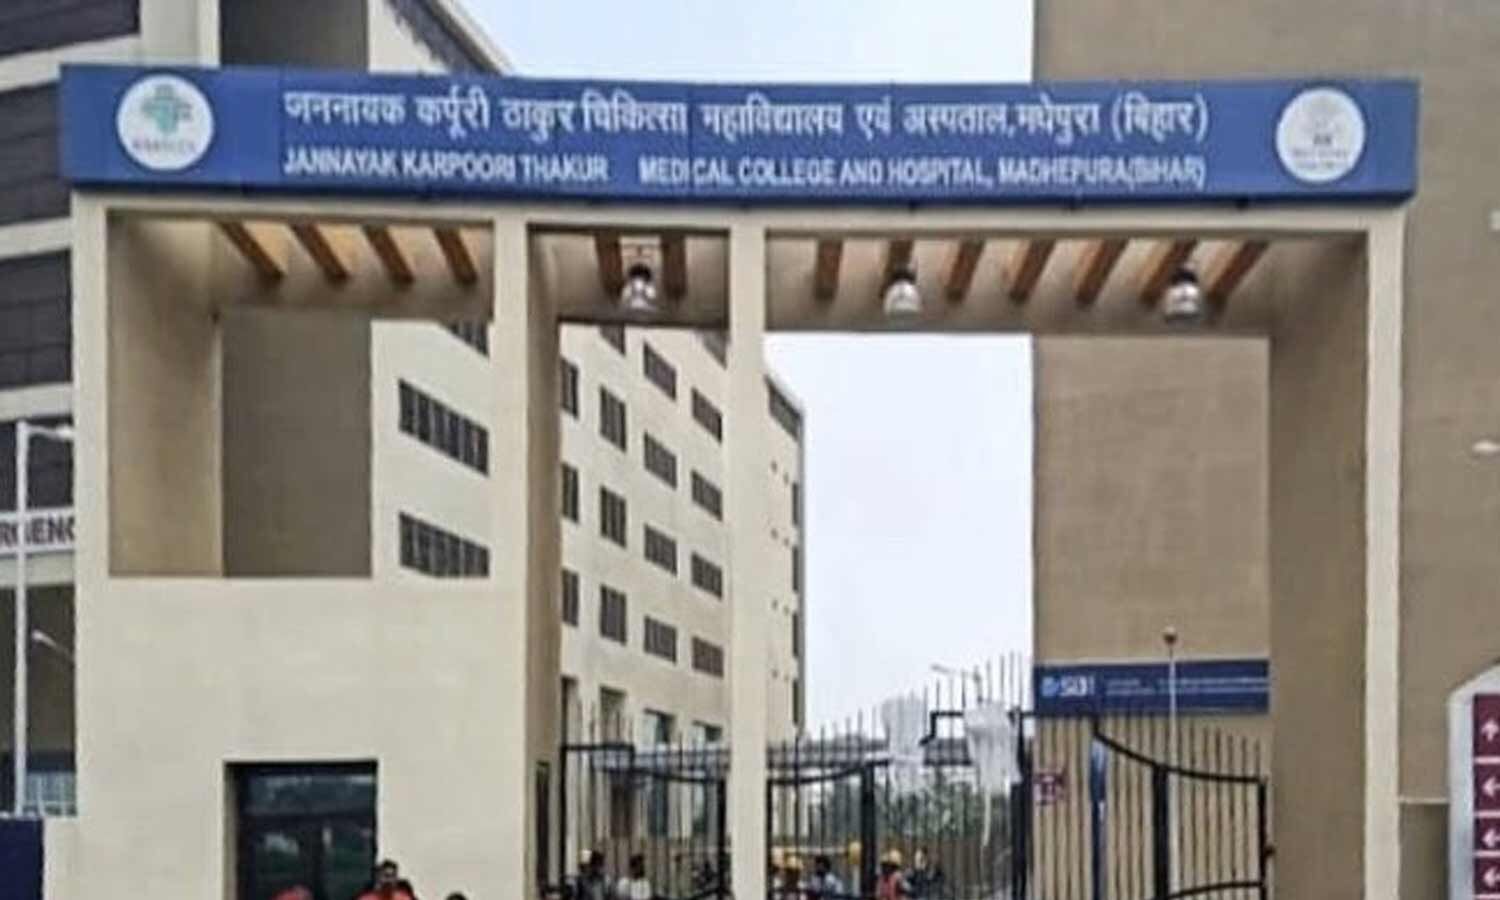 Bihar CM inaugurates Karpoori Thakur Government Medical College Hospital in Madhepura